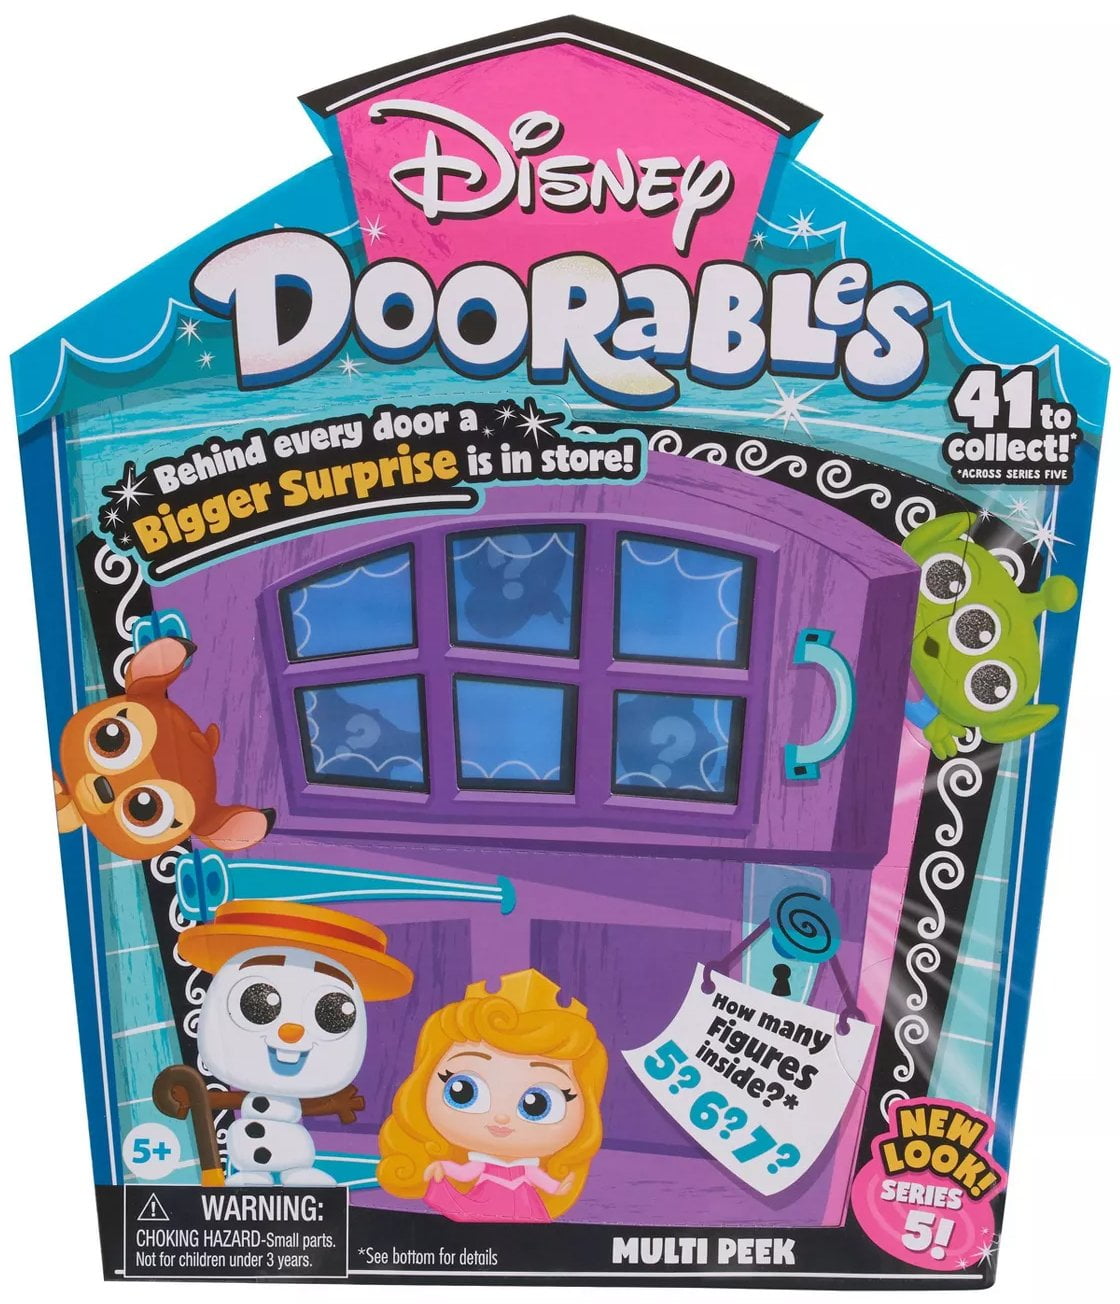 Disney Doorable Series 5 - multi peek (5-7 pieces per box)